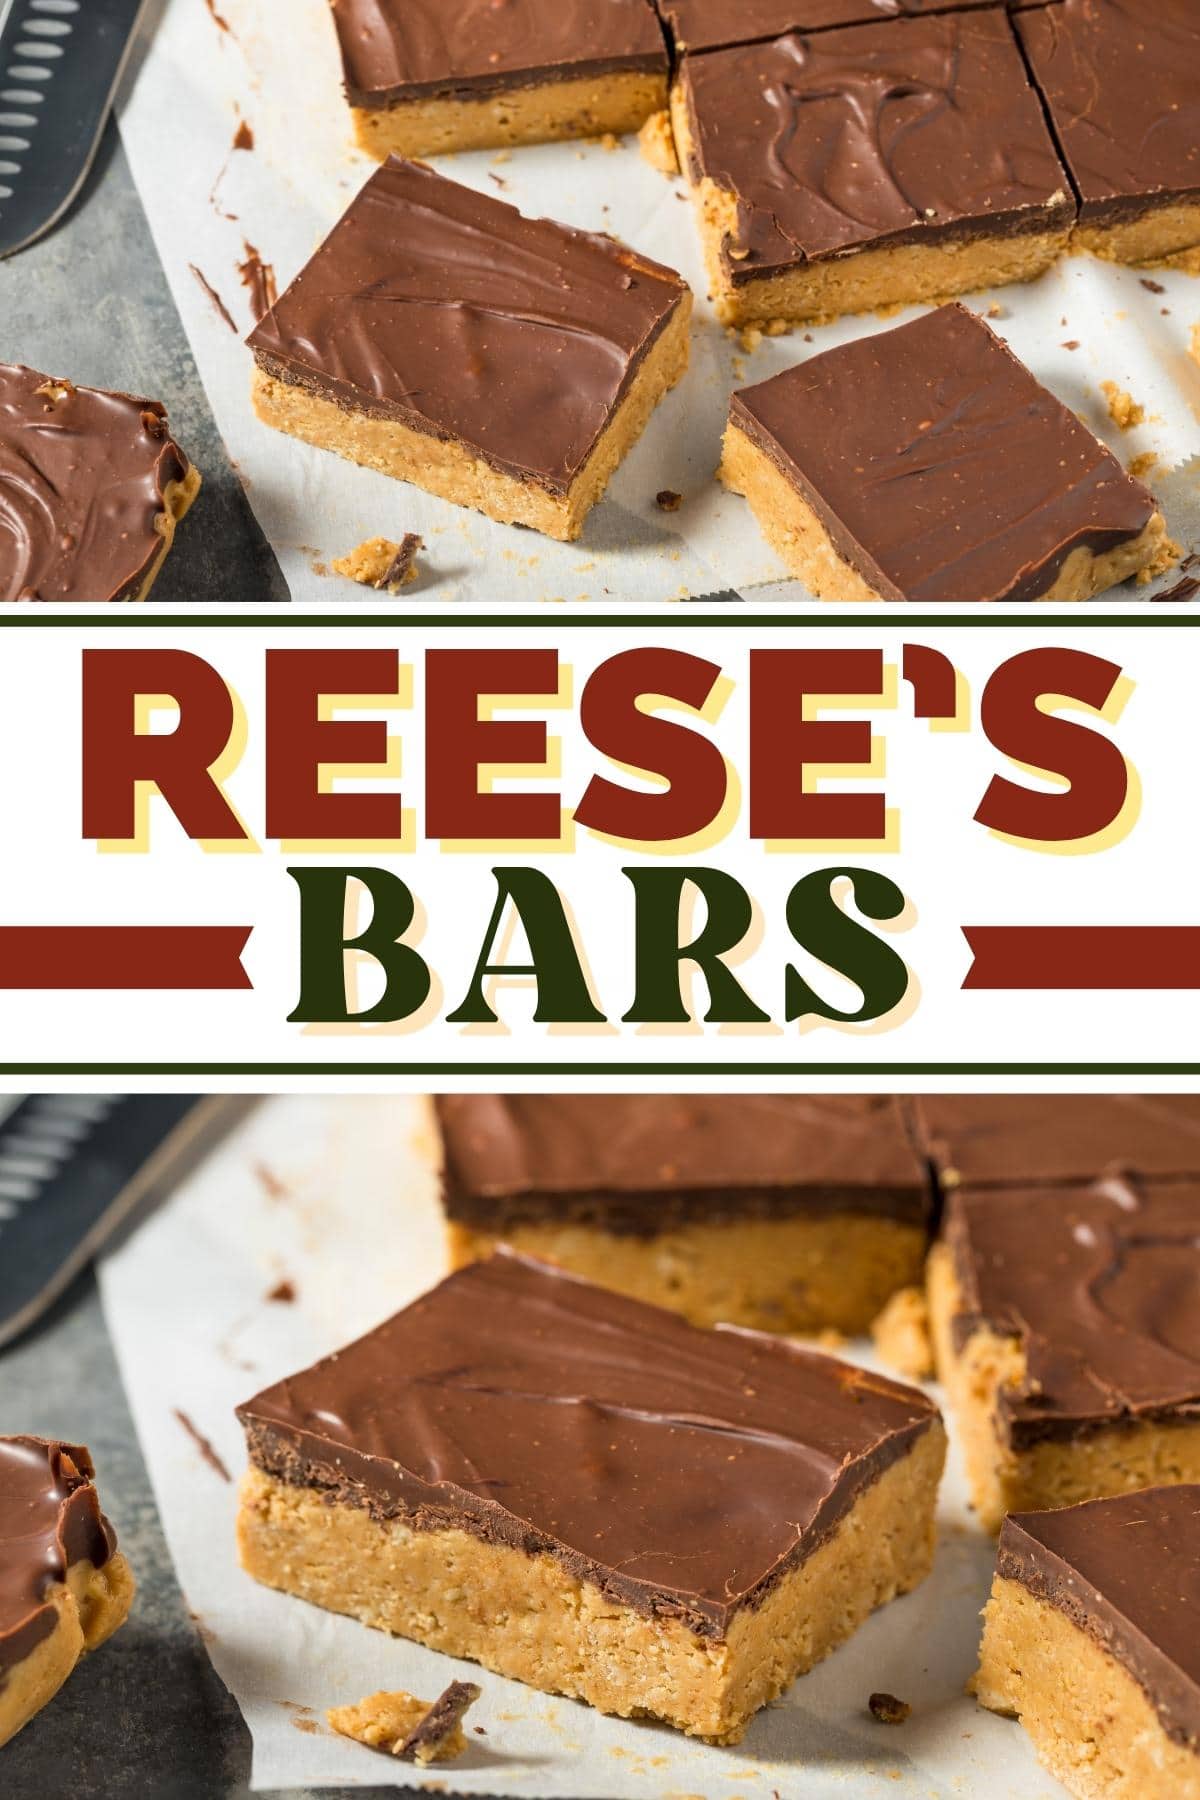 Reese’s Bars